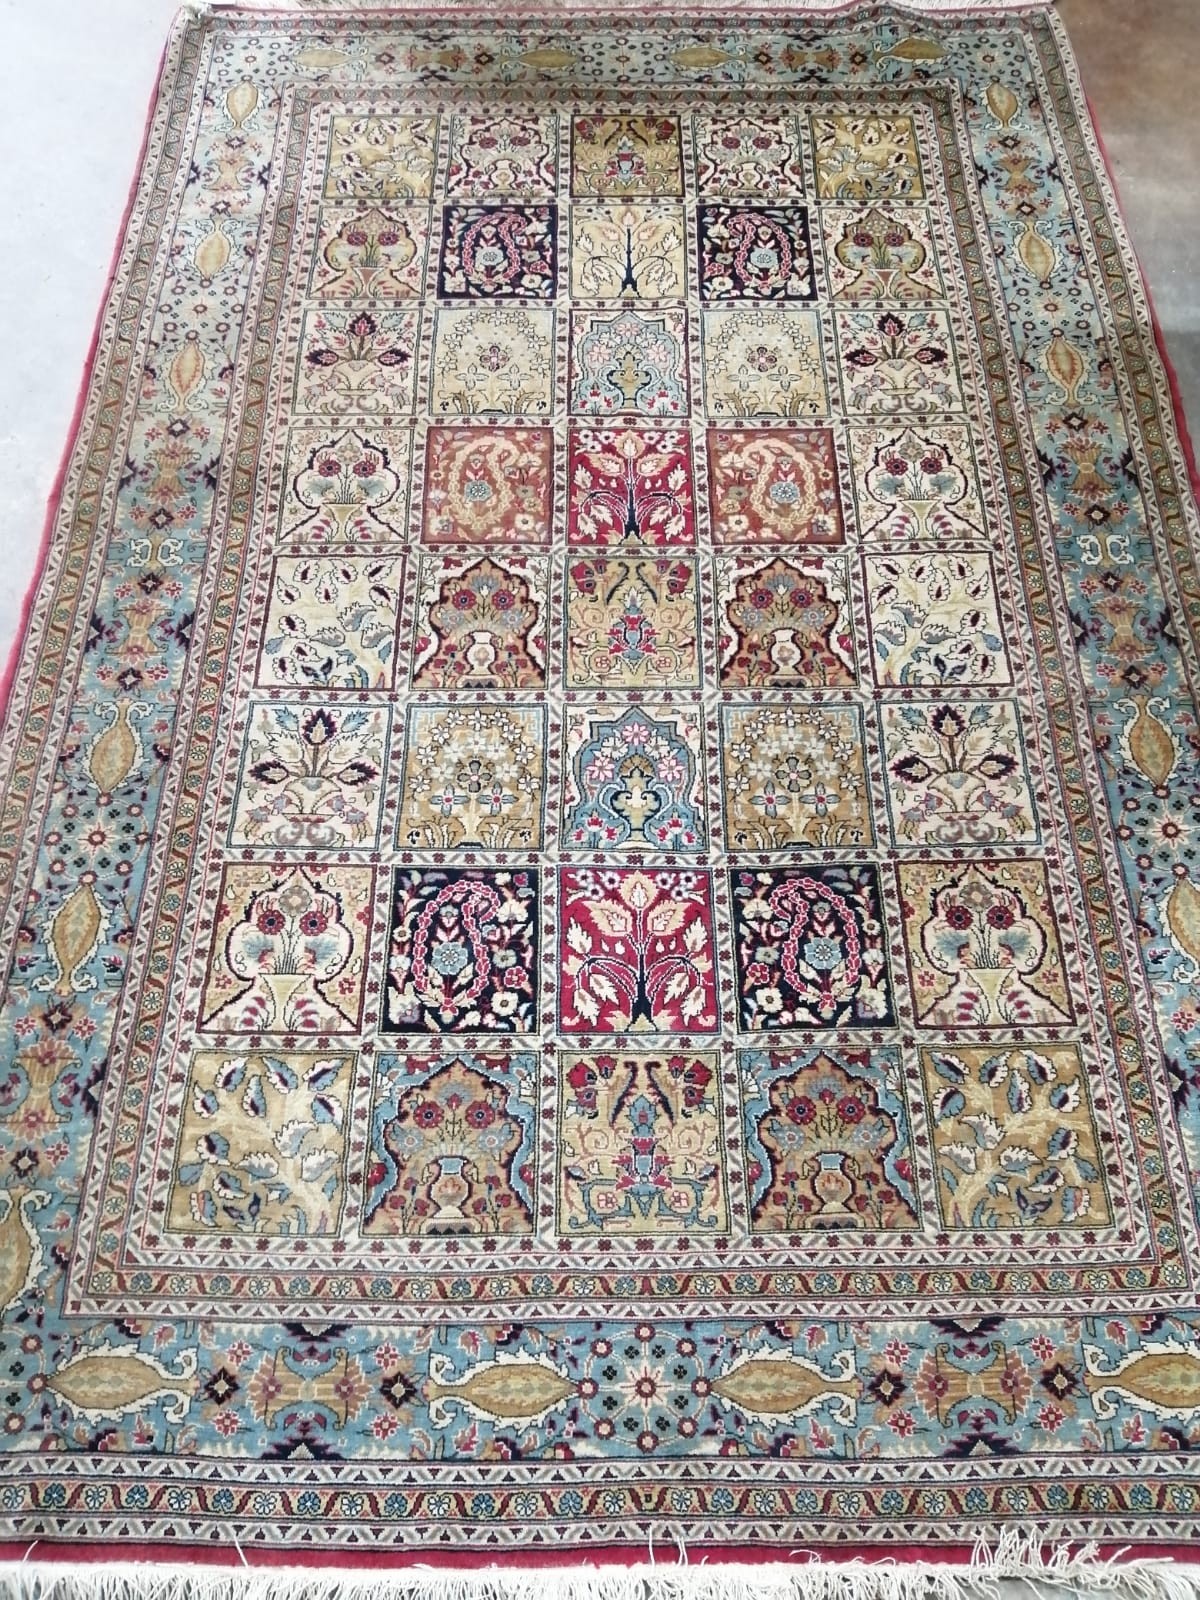 A Baktiari carpet, 216 x 143cm